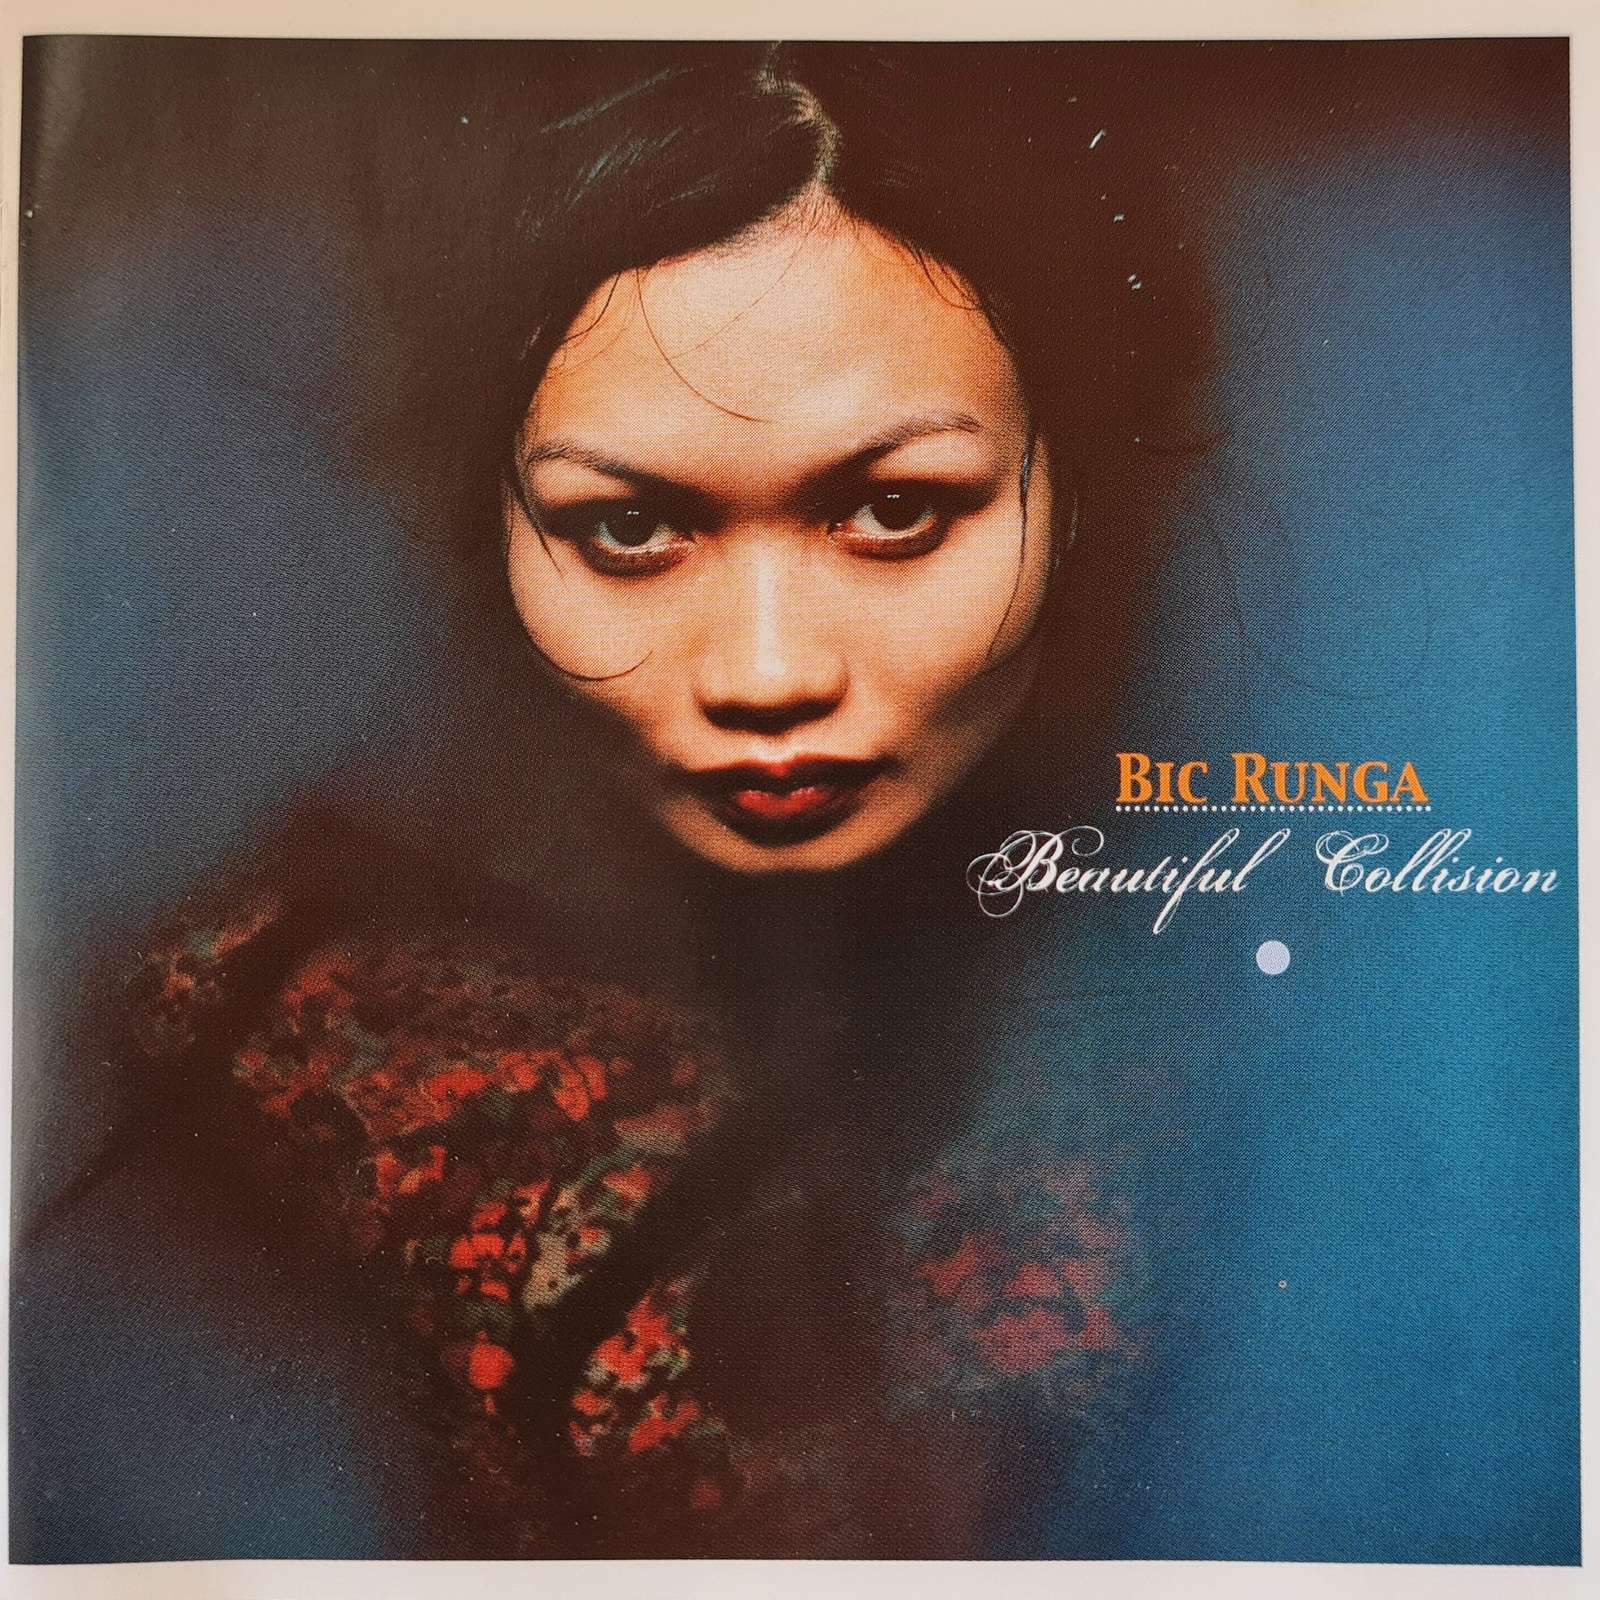 Bic Runga - Beautiful Collision - Limited Edition (CD)